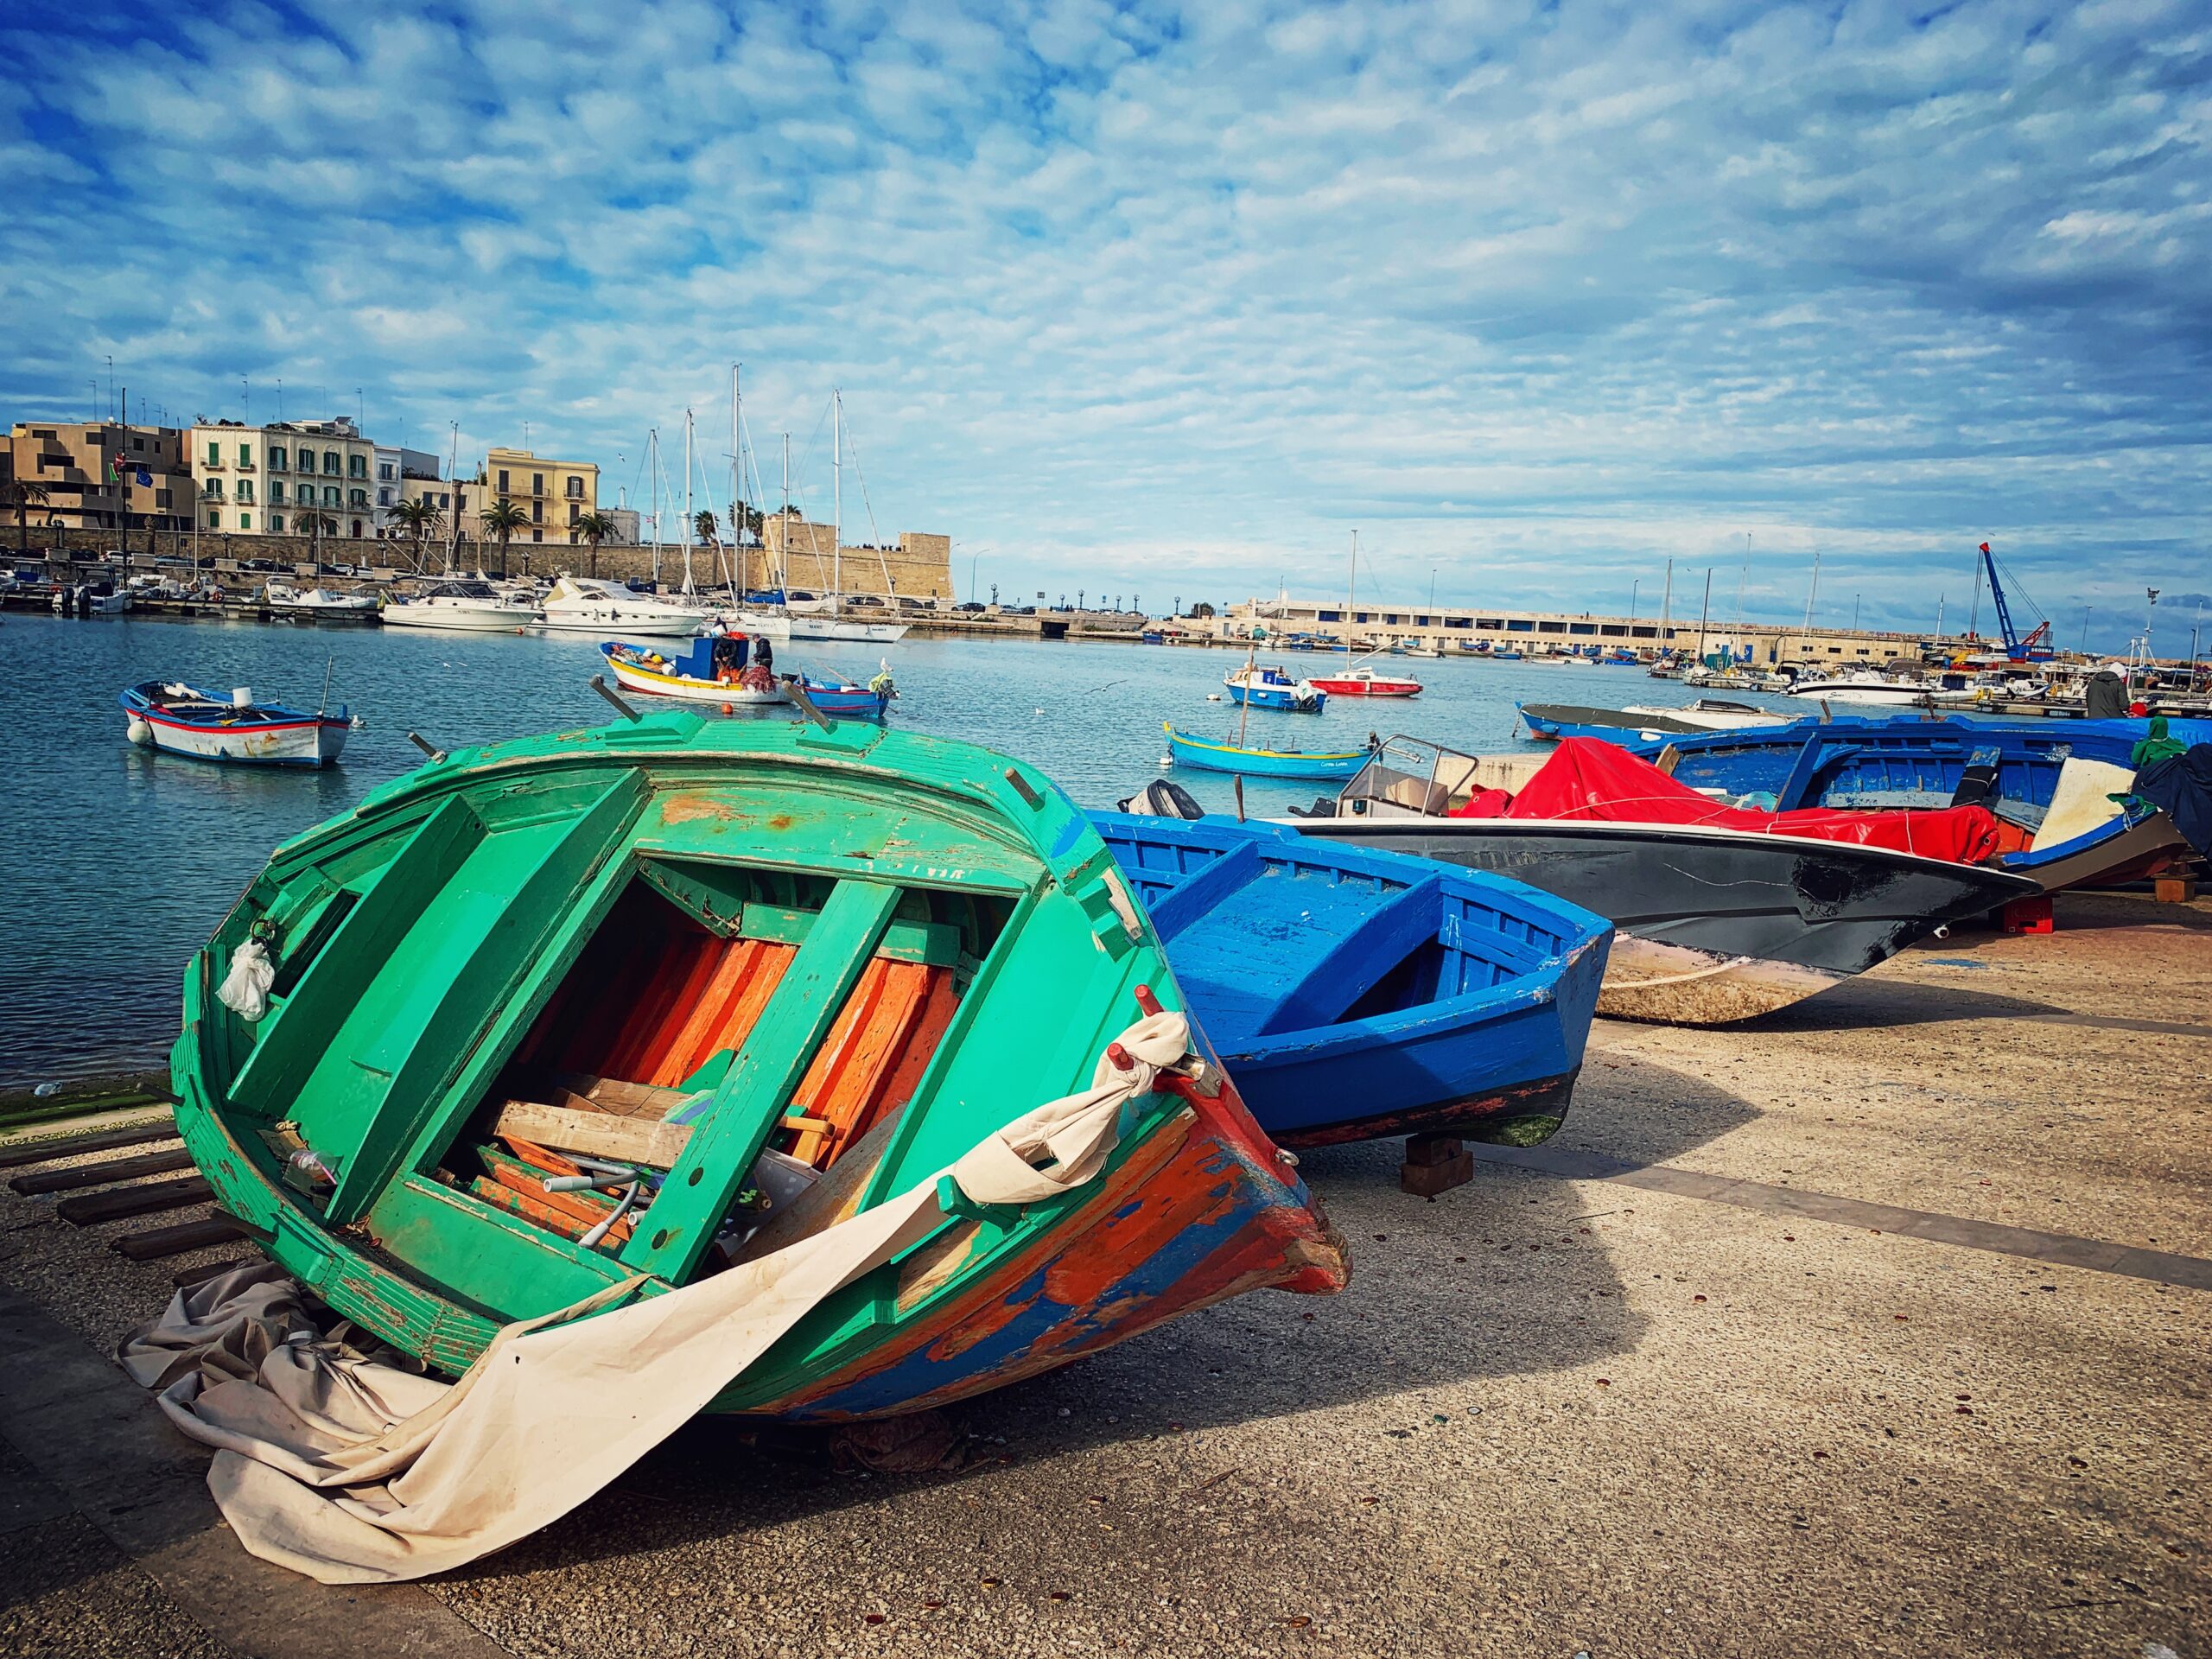 Typical blue “gozzi” fishing boats at Bari’s old port, porto vecchio.